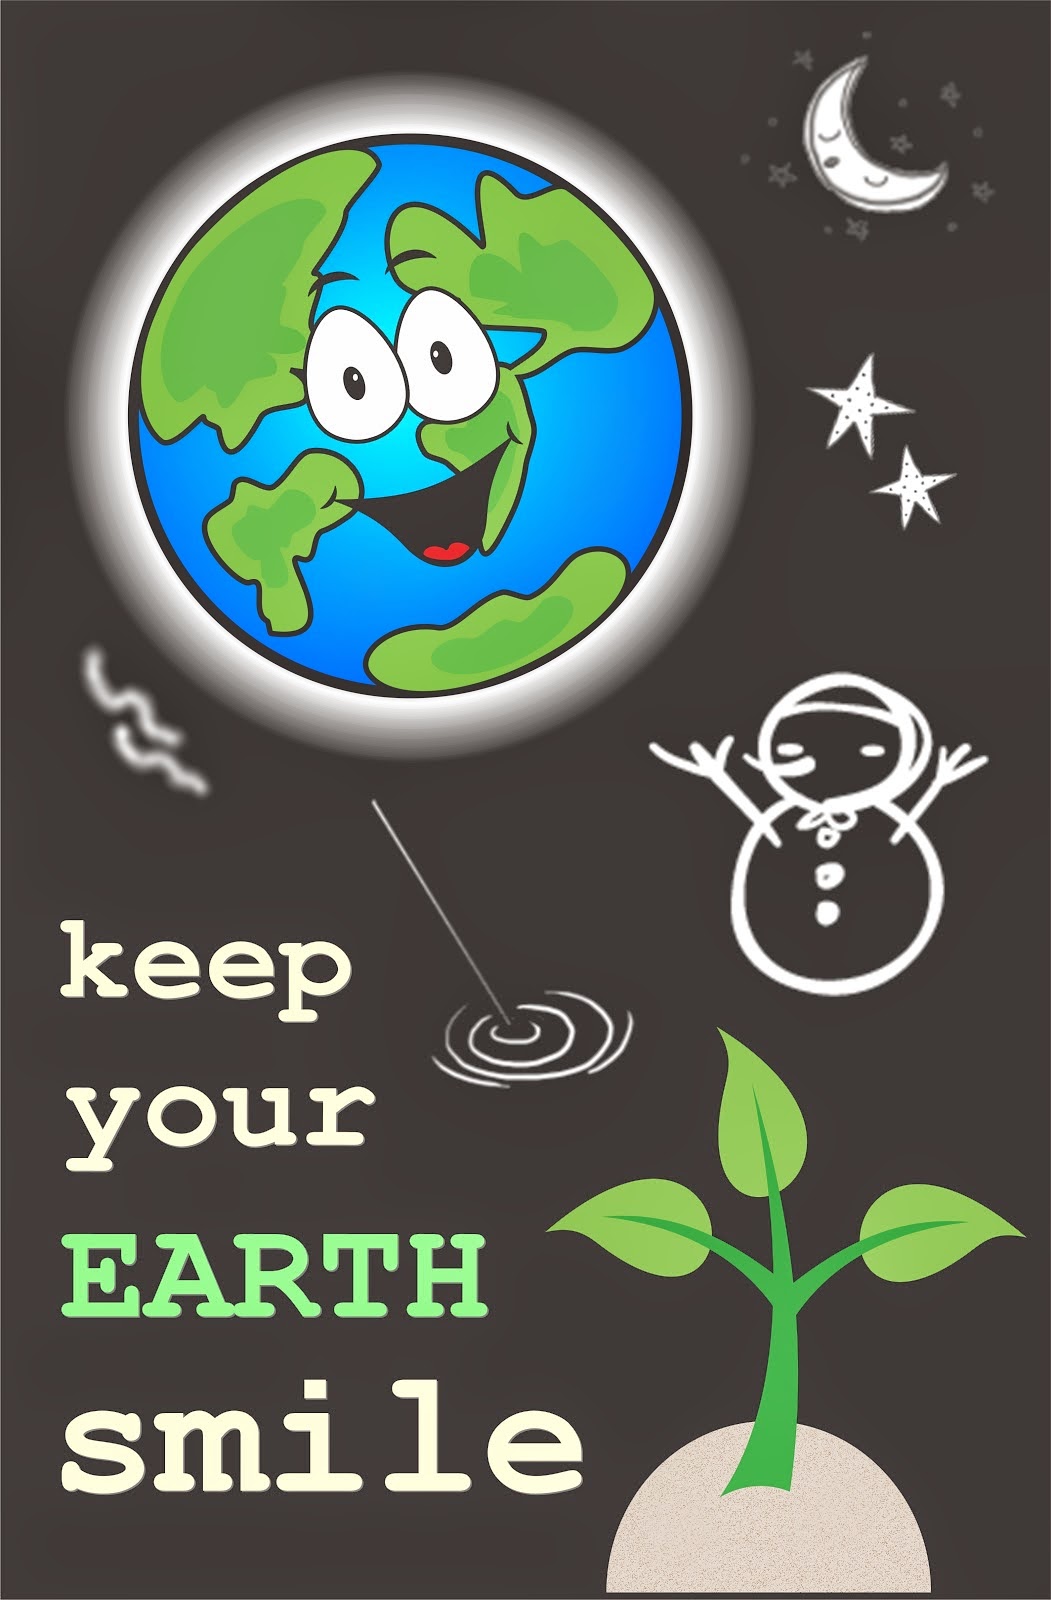 Kawoel's Blog: Gambar poster lingkungan hidup (adiwiyata,go green